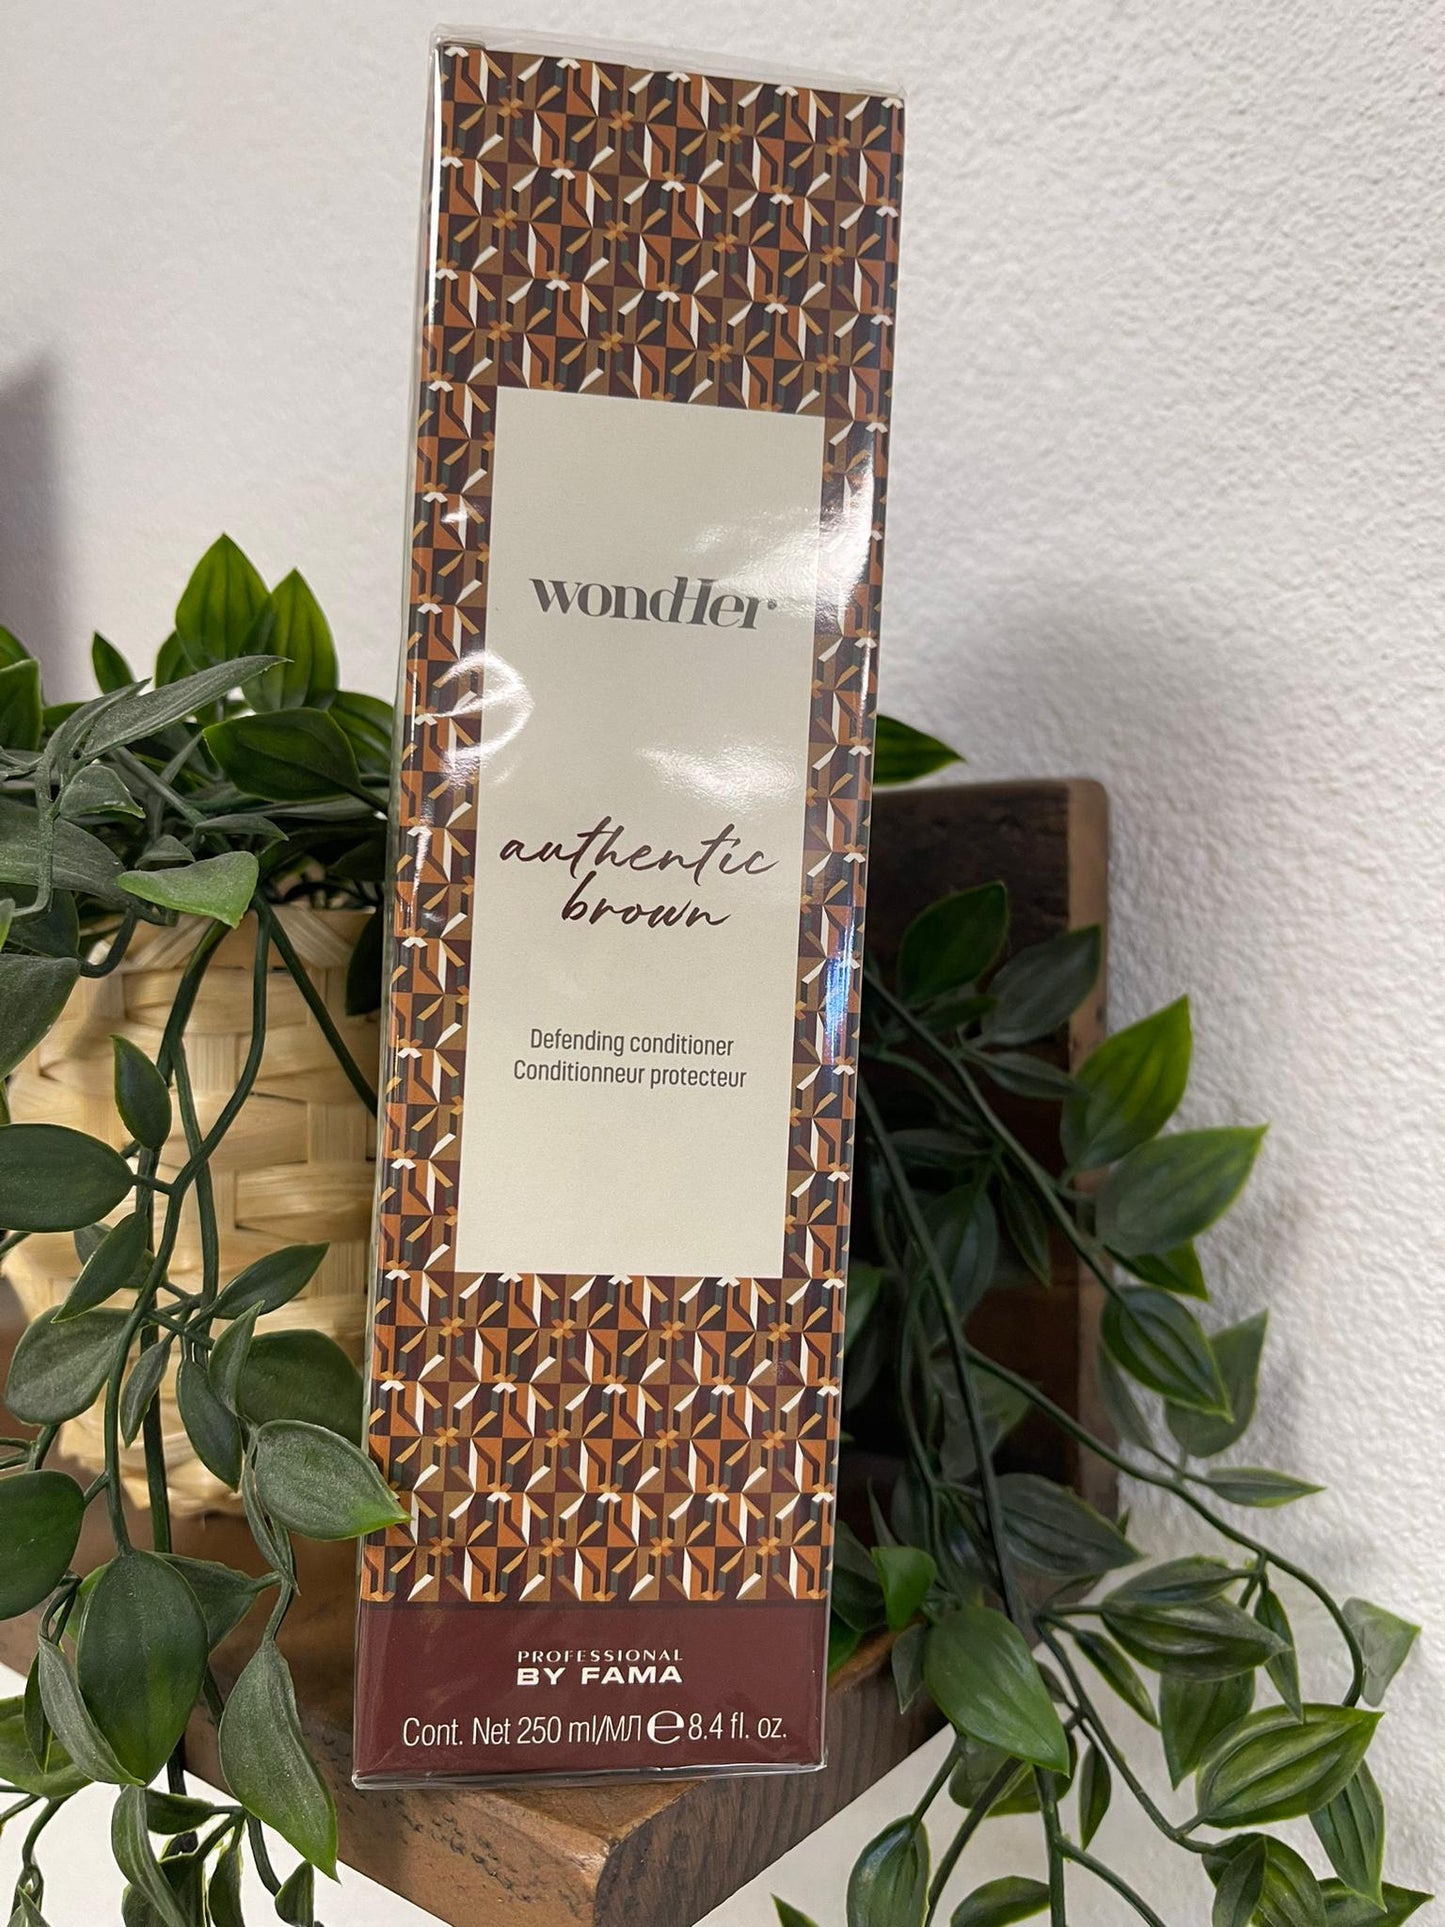 WondHer - Authentic Brown Defending Conditioner